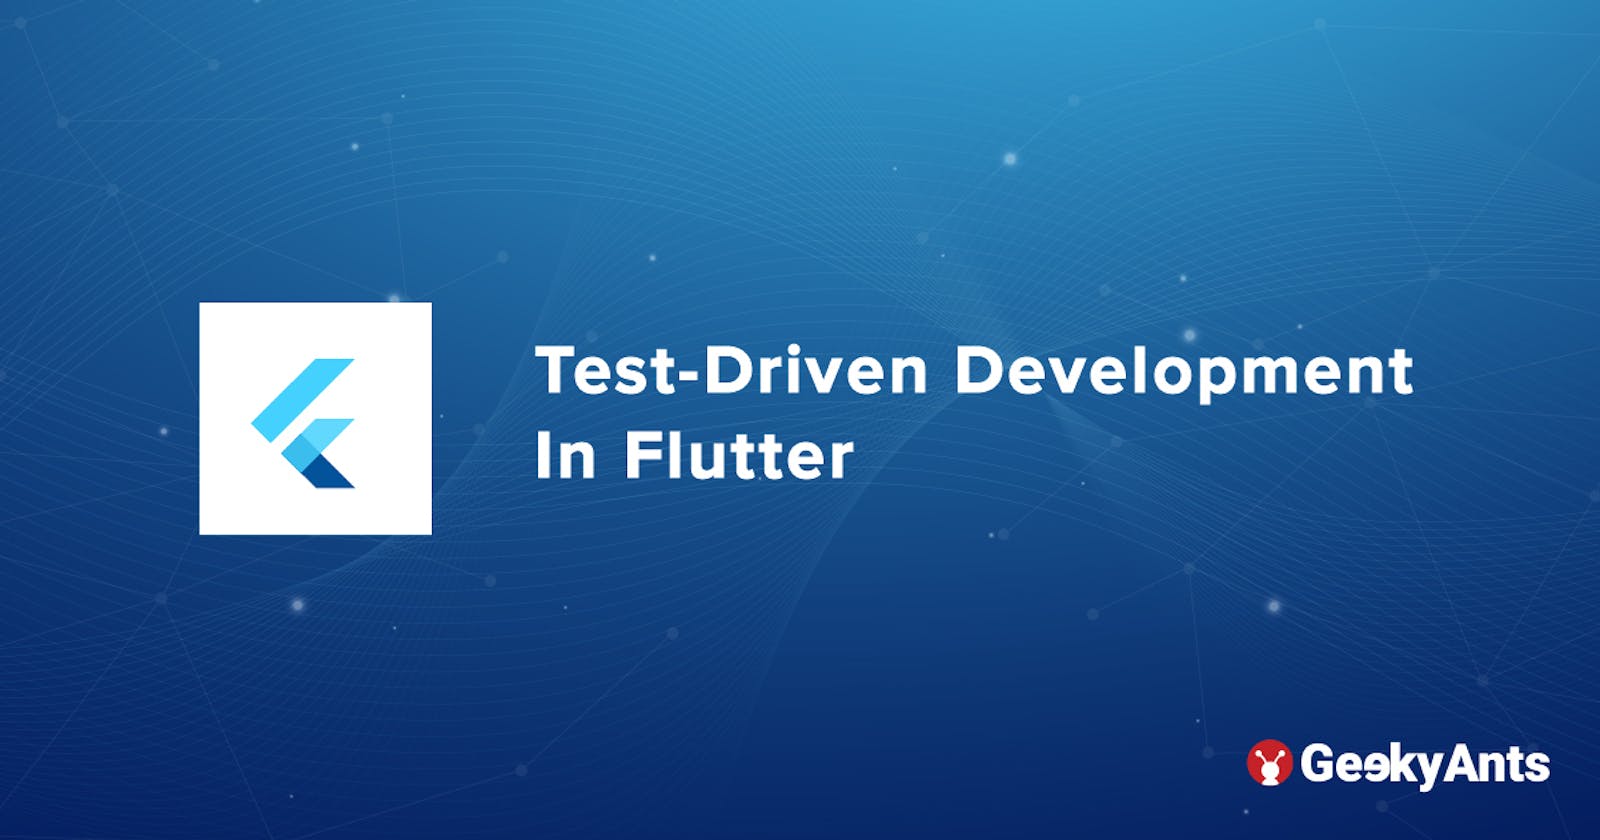 Test-driven Development in Flutter